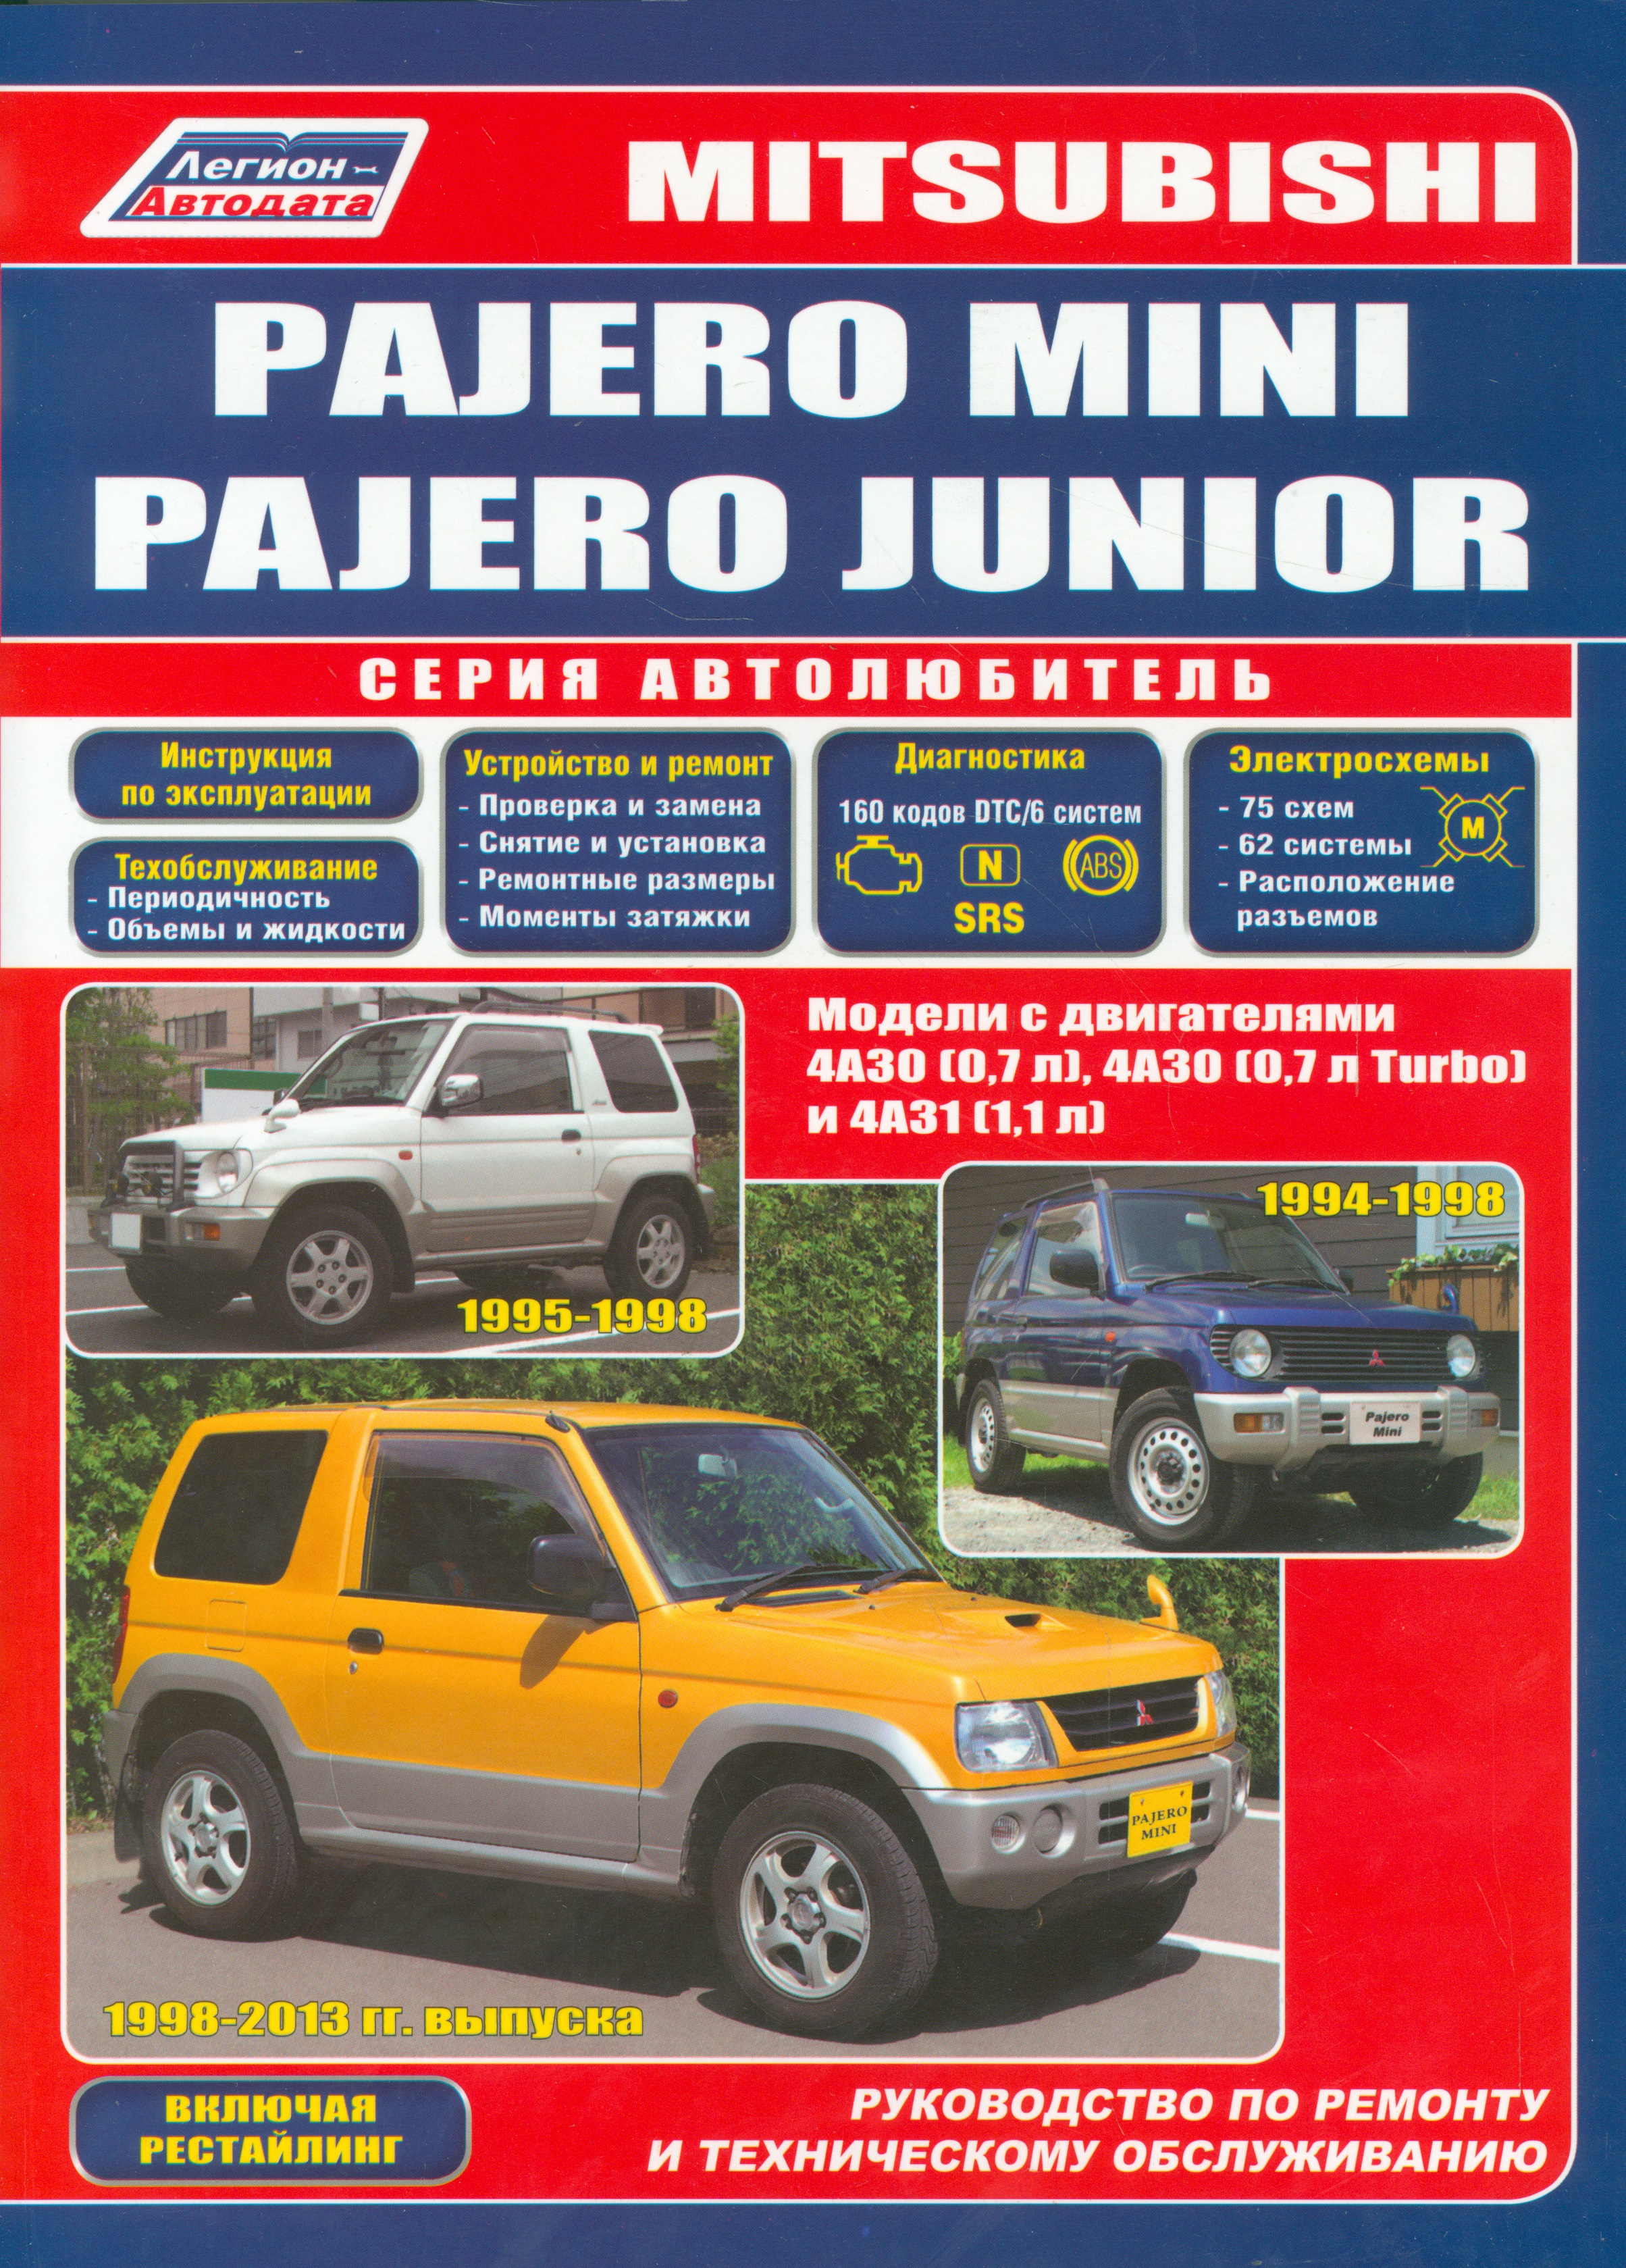 Mitsubishi Pajero Mini Pajero Junior Мод. с двигат. 4А30 (0,7 л.) 4А30… (мАвтолюбитель) f5a51 набор для ремонта коробки передач для mitsubishi